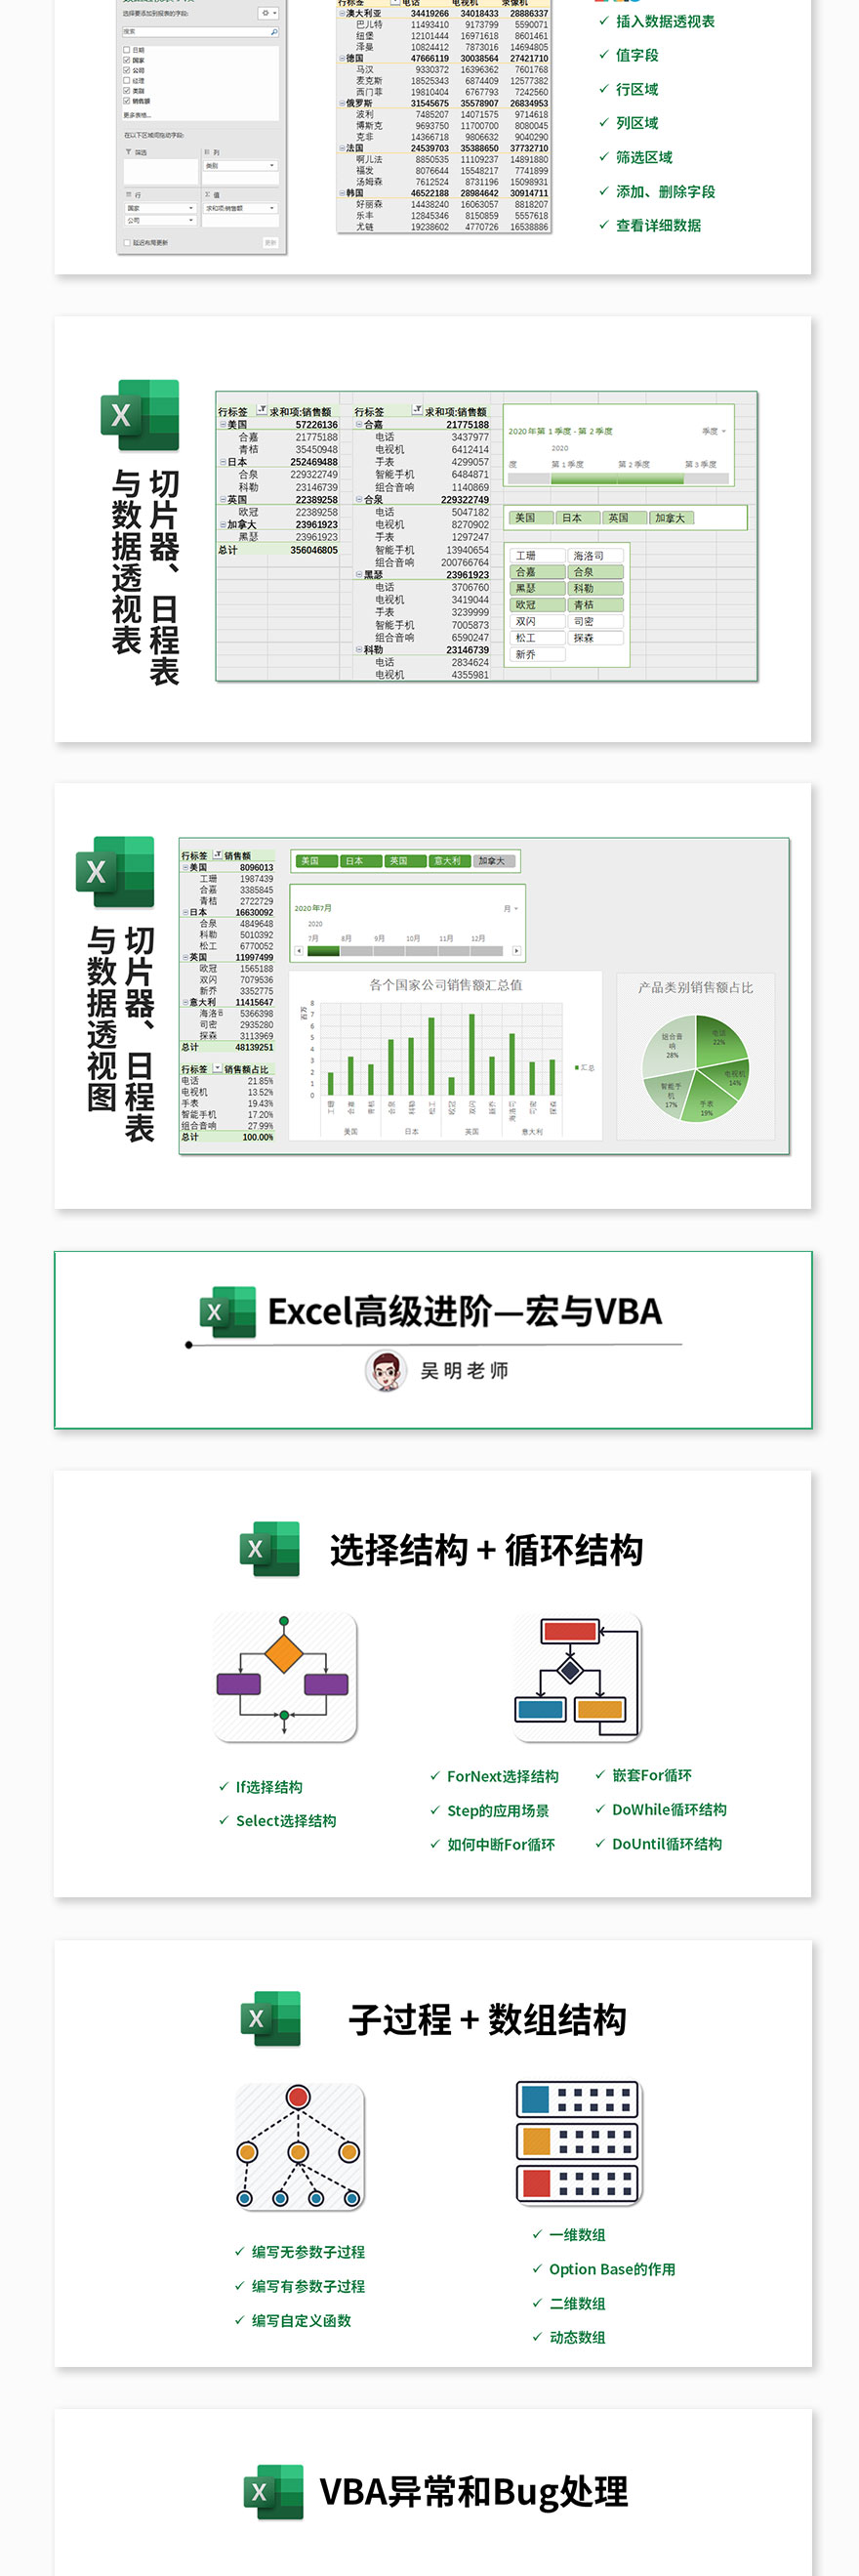 Excel综合课程_04.jpg